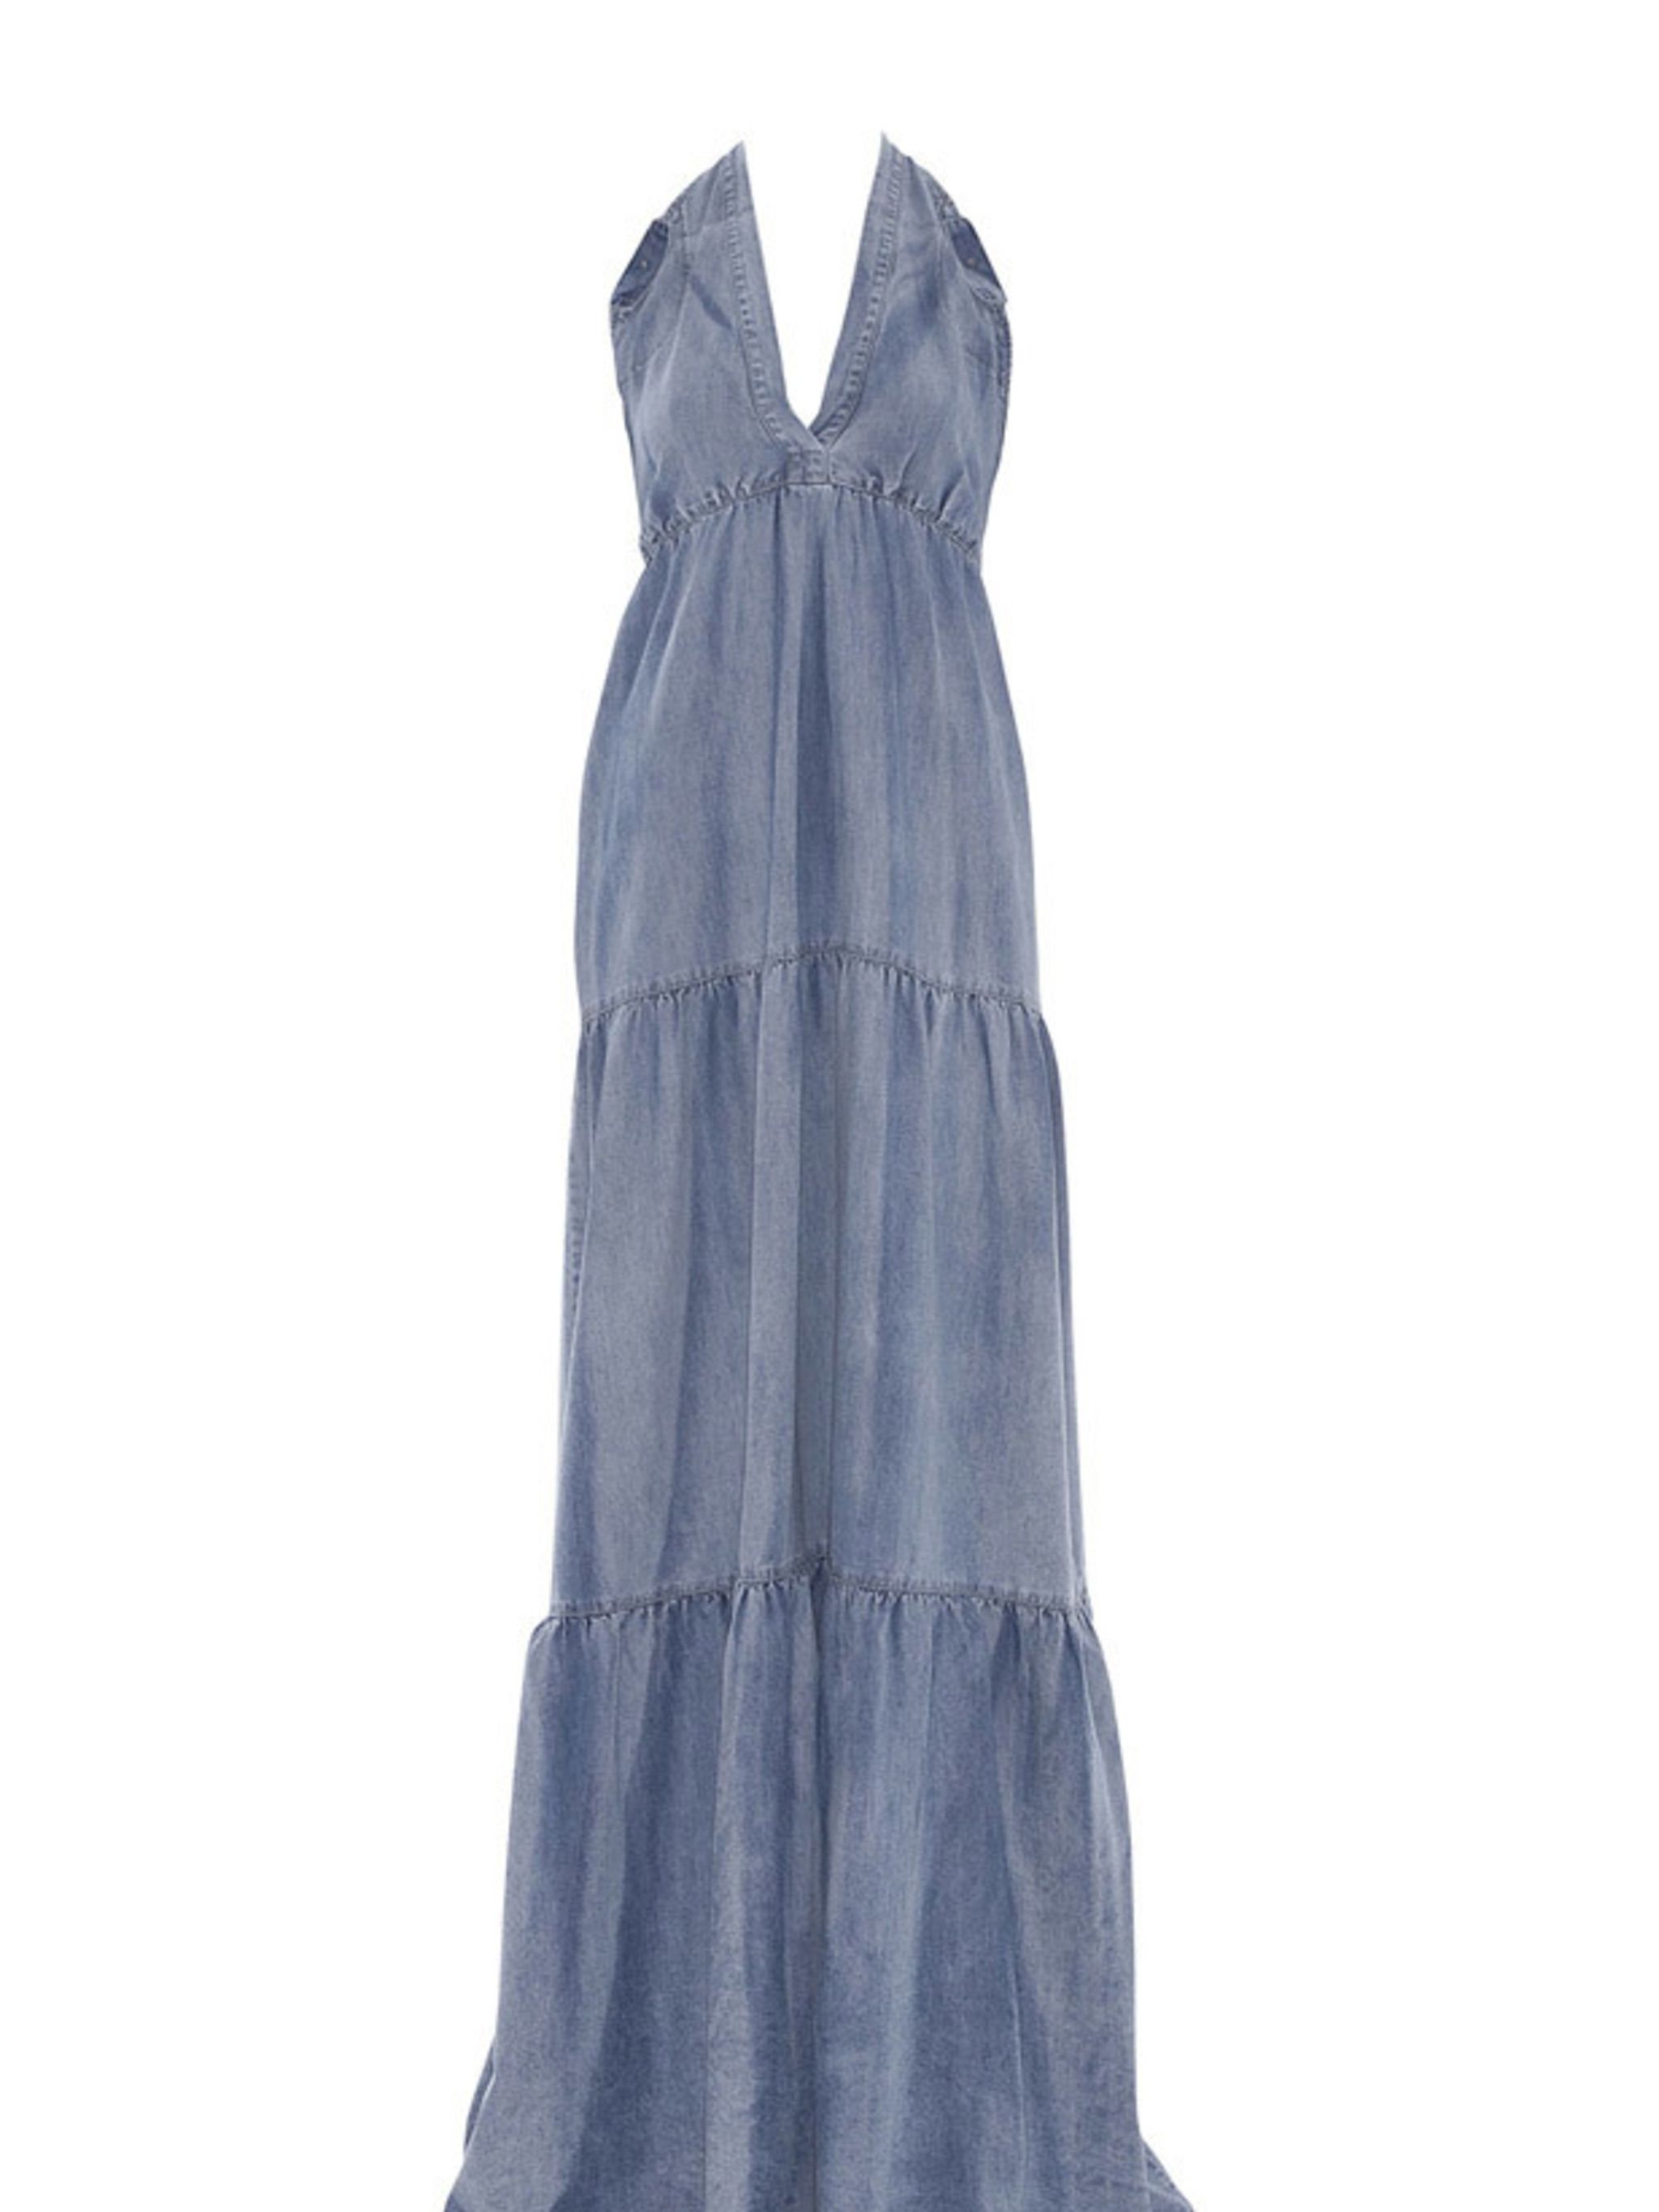 MiladA | M12423R - Sleeveless Flared Maxi Dress - 5350.00 UK 10 - 16 |  Instagram